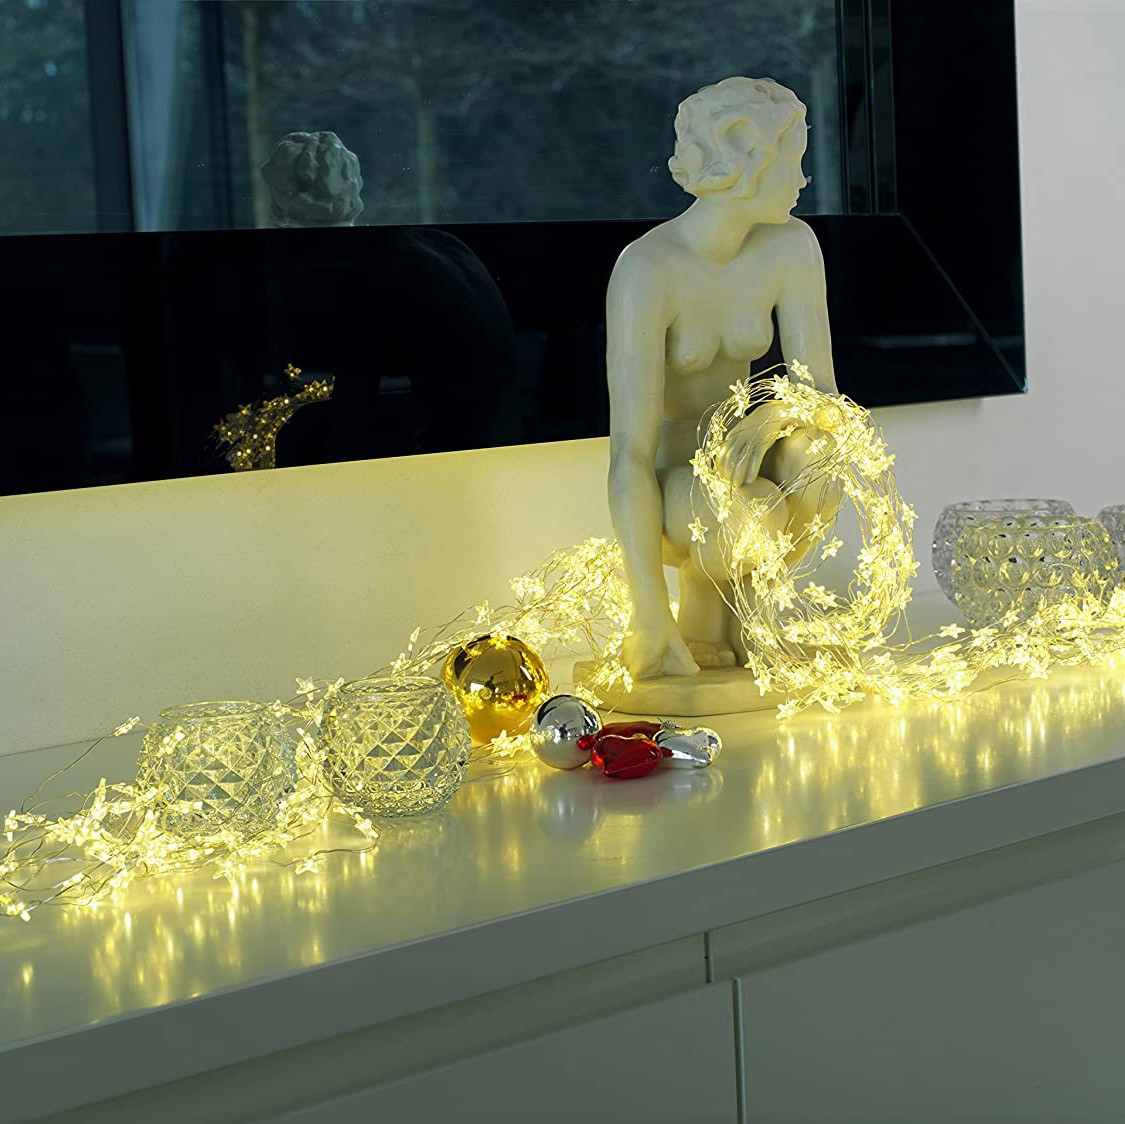 86,95 € Free Shipping | Decorative lighting 5W Led lights. tinsel imitation Pmma. Silver Color